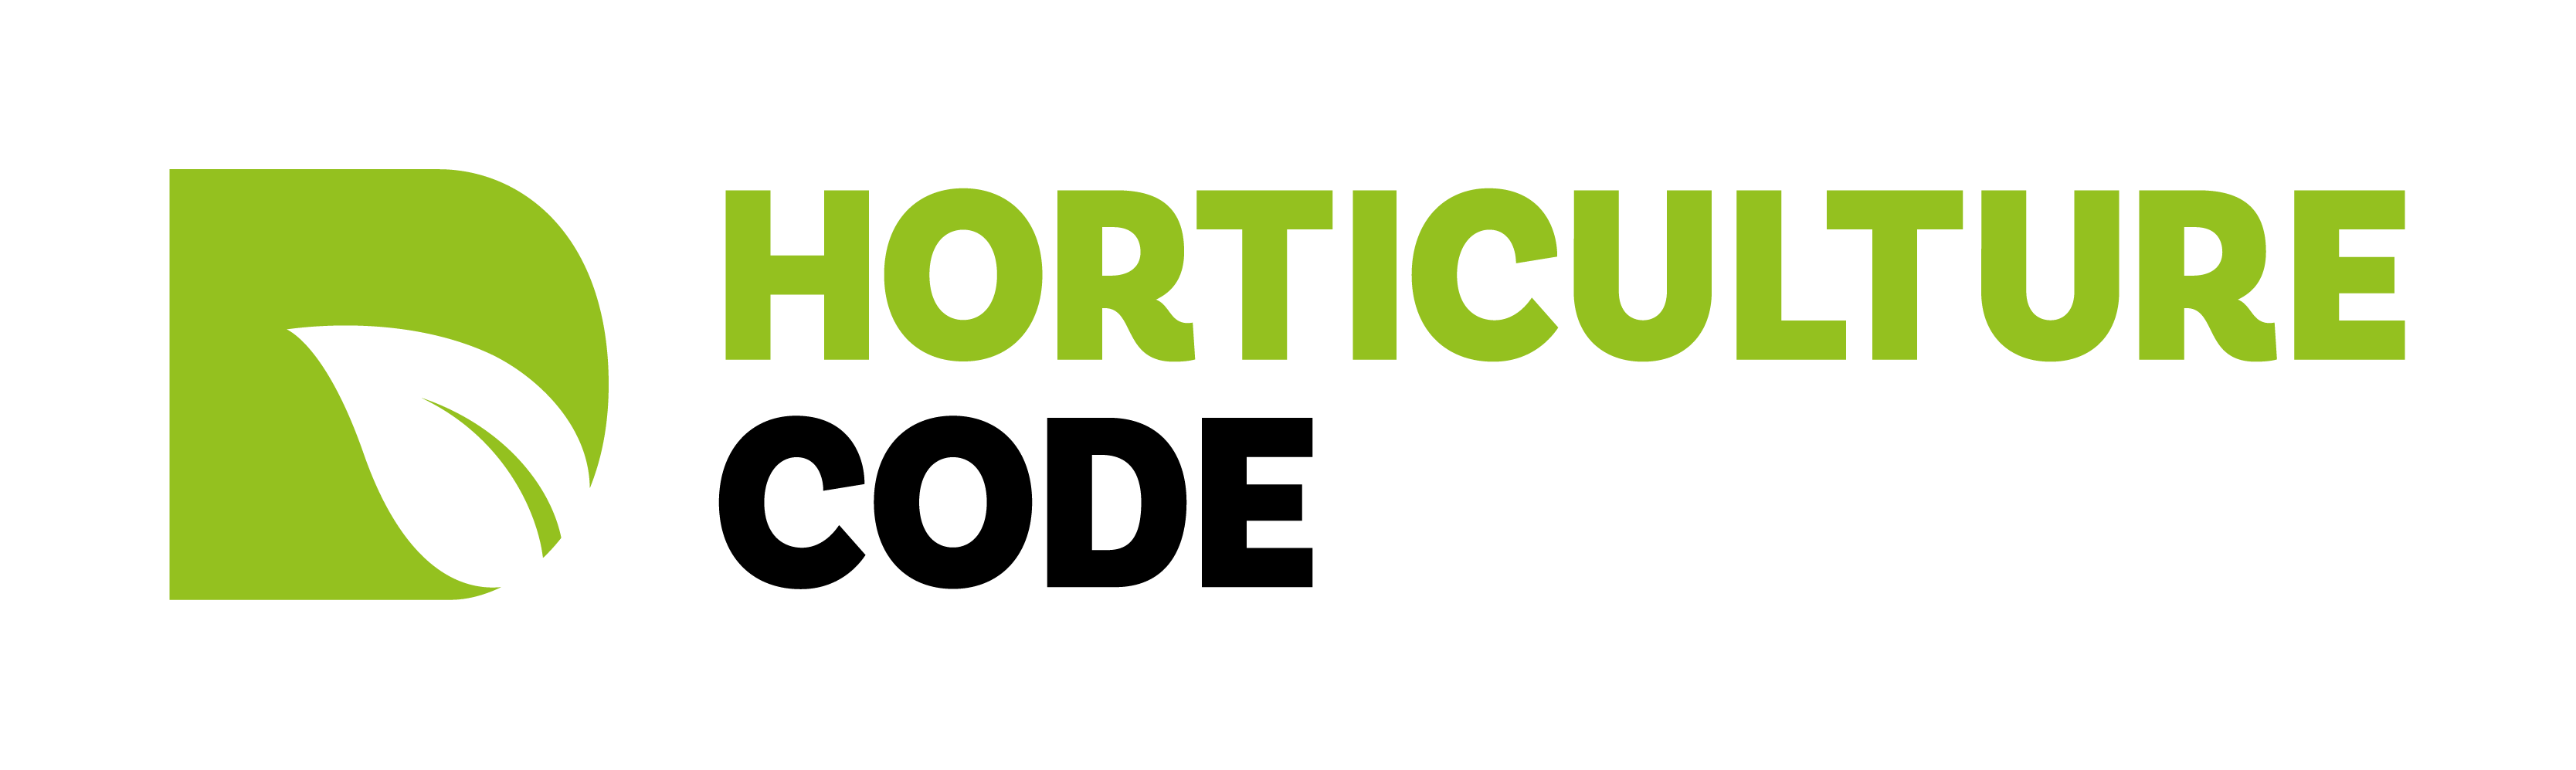 Horticulture Code